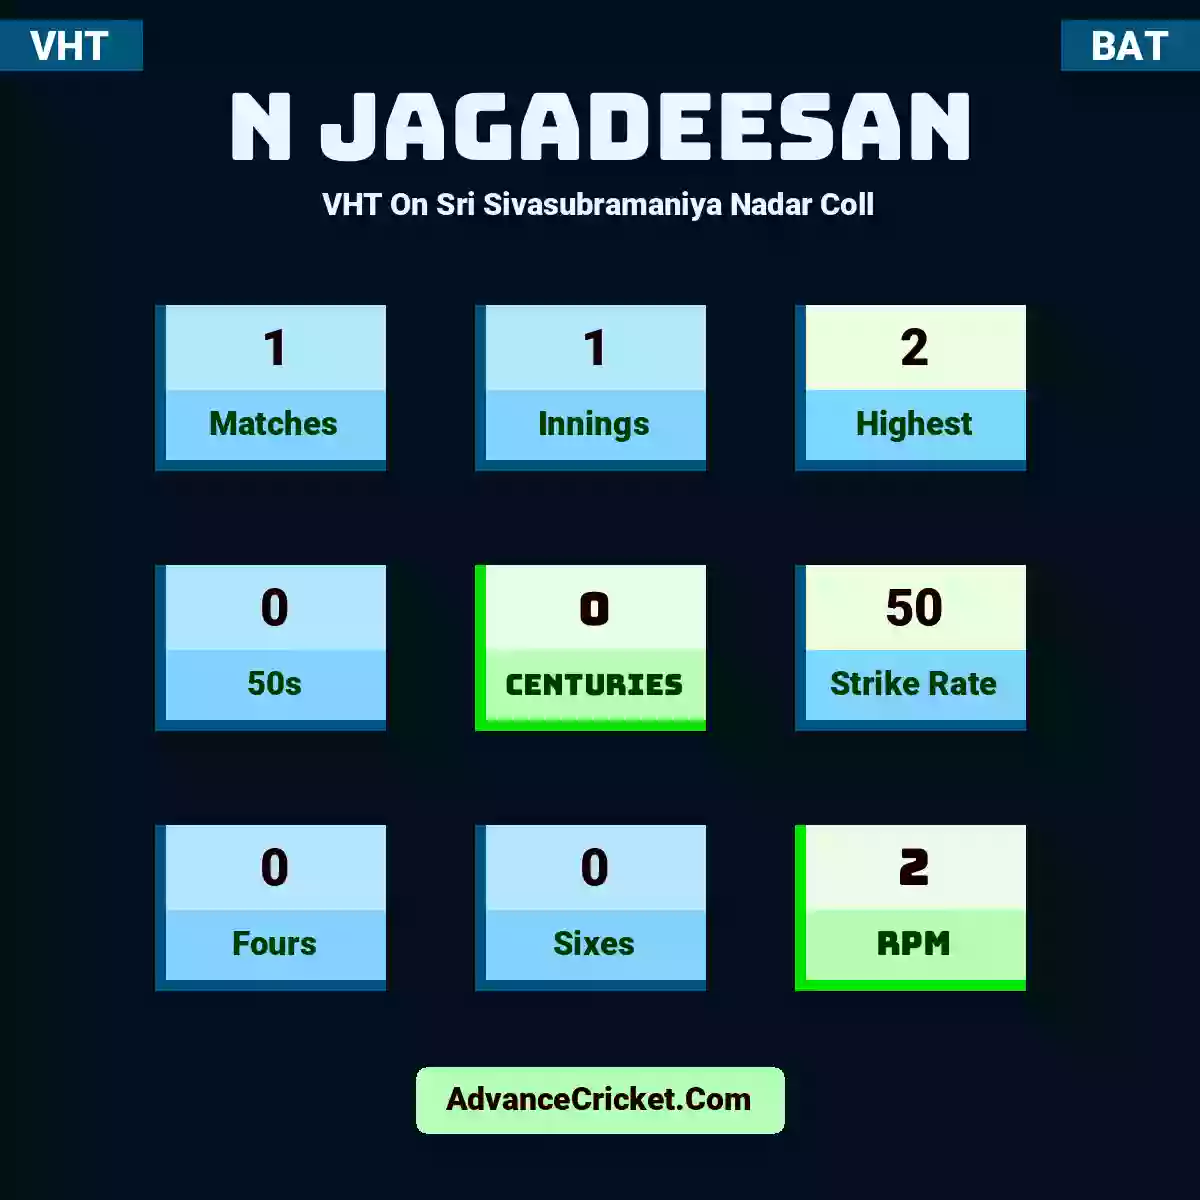 N Jagadeesan VHT  On Sri Sivasubramaniya Nadar Coll, N Jagadeesan played 1 matches, scored 2 runs as highest, 0 half-centuries, and 0 centuries, with a strike rate of 50. N.Jagadeesan hit 0 fours and 0 sixes, with an RPM of 2.